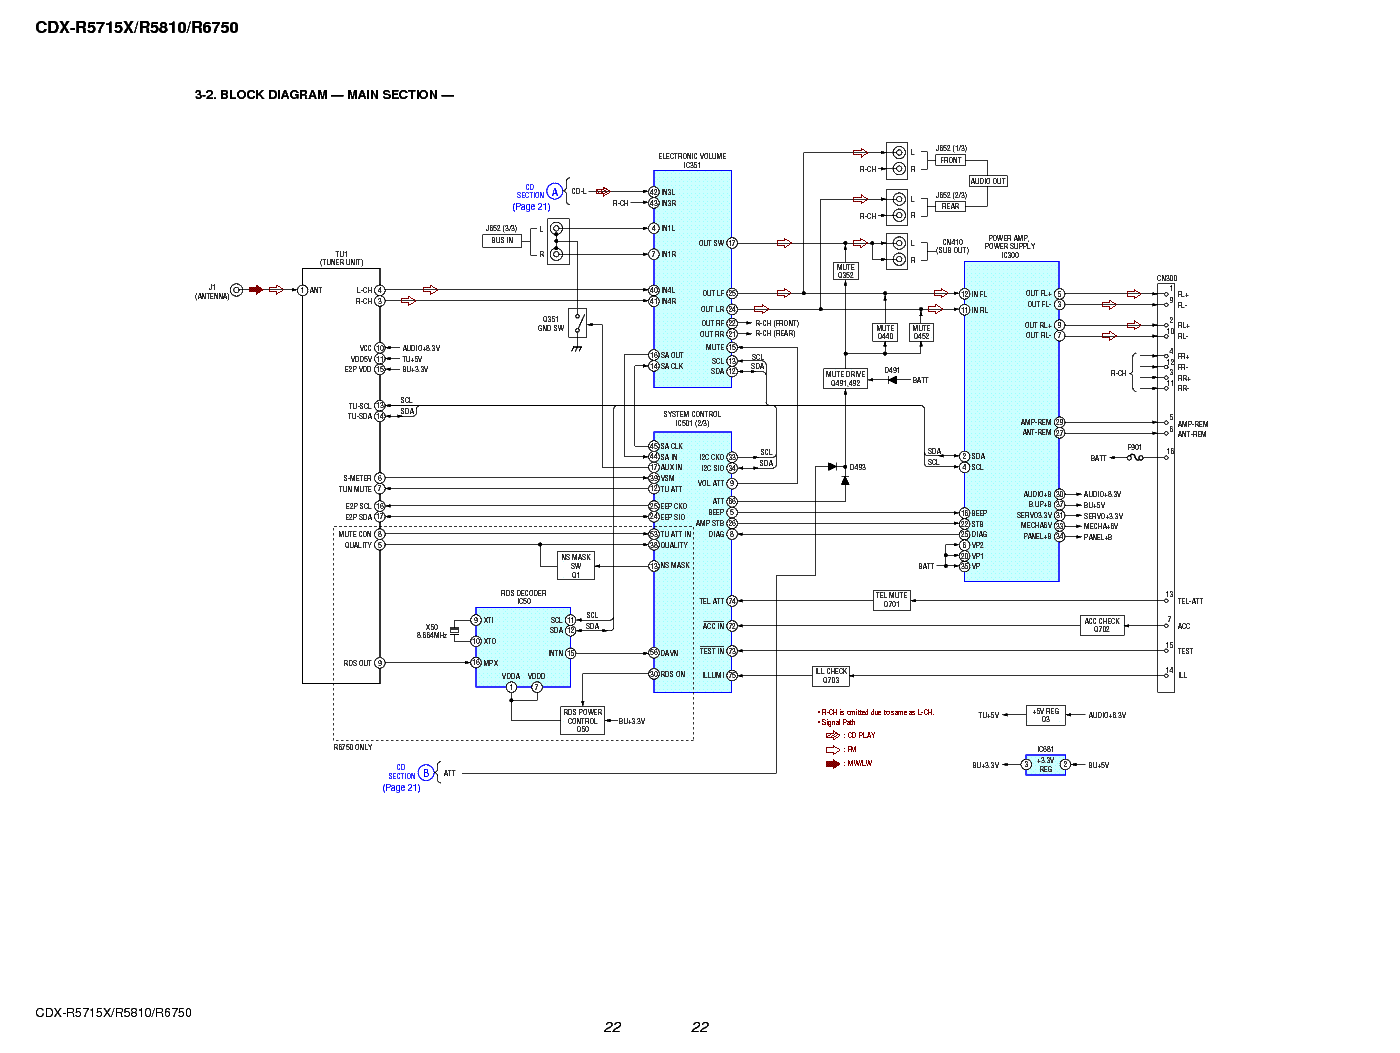 sony cdx gt565up wiring diagram